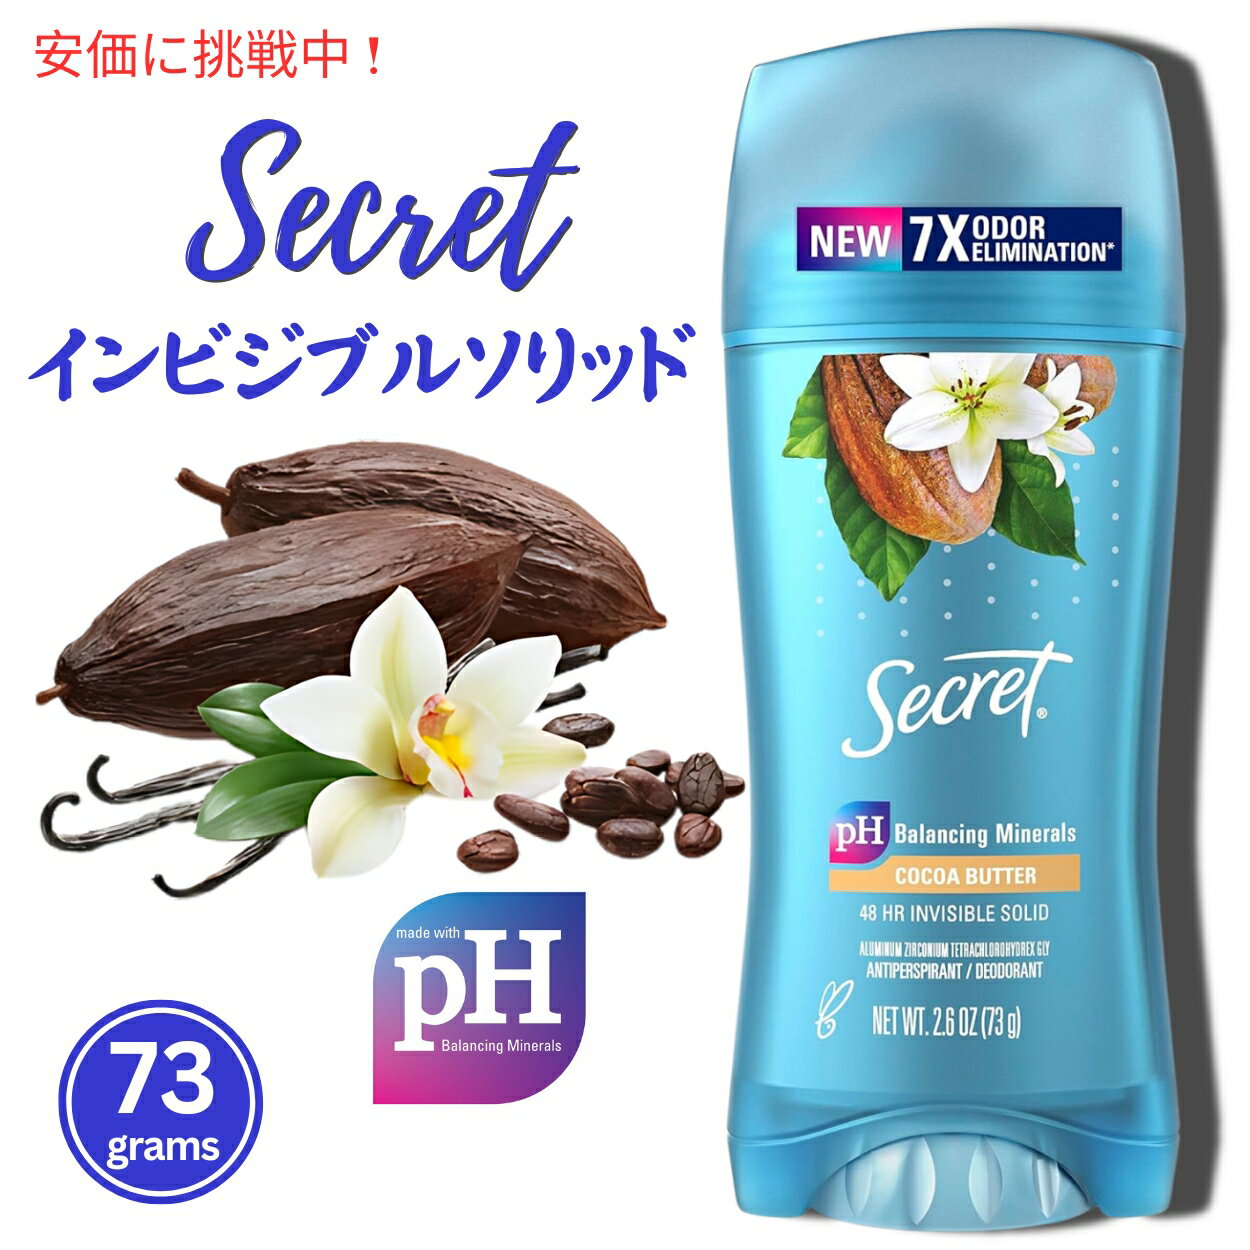 Secret シークレット インビジブルソリッド ココアバター デオドラント 73g Secret Invisible Solid Cocoa Butter 2.6oz